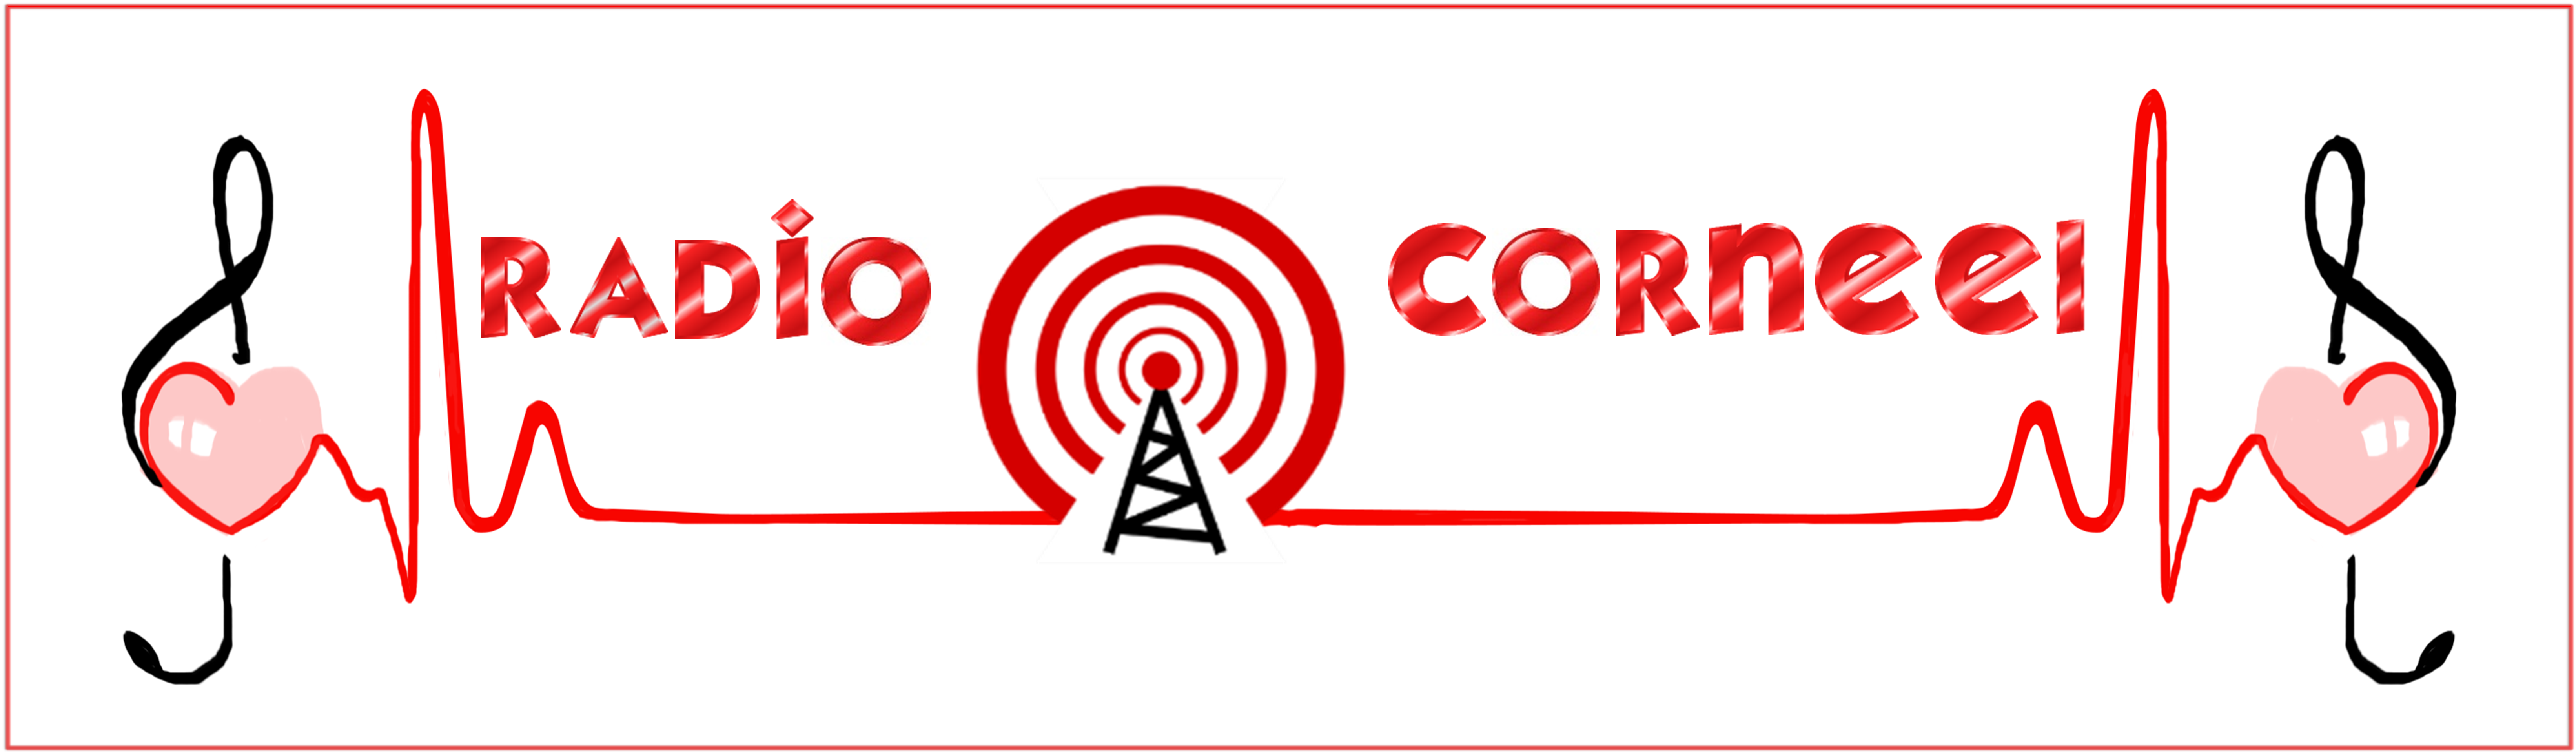 Radio Corneel 5-18 september 2022